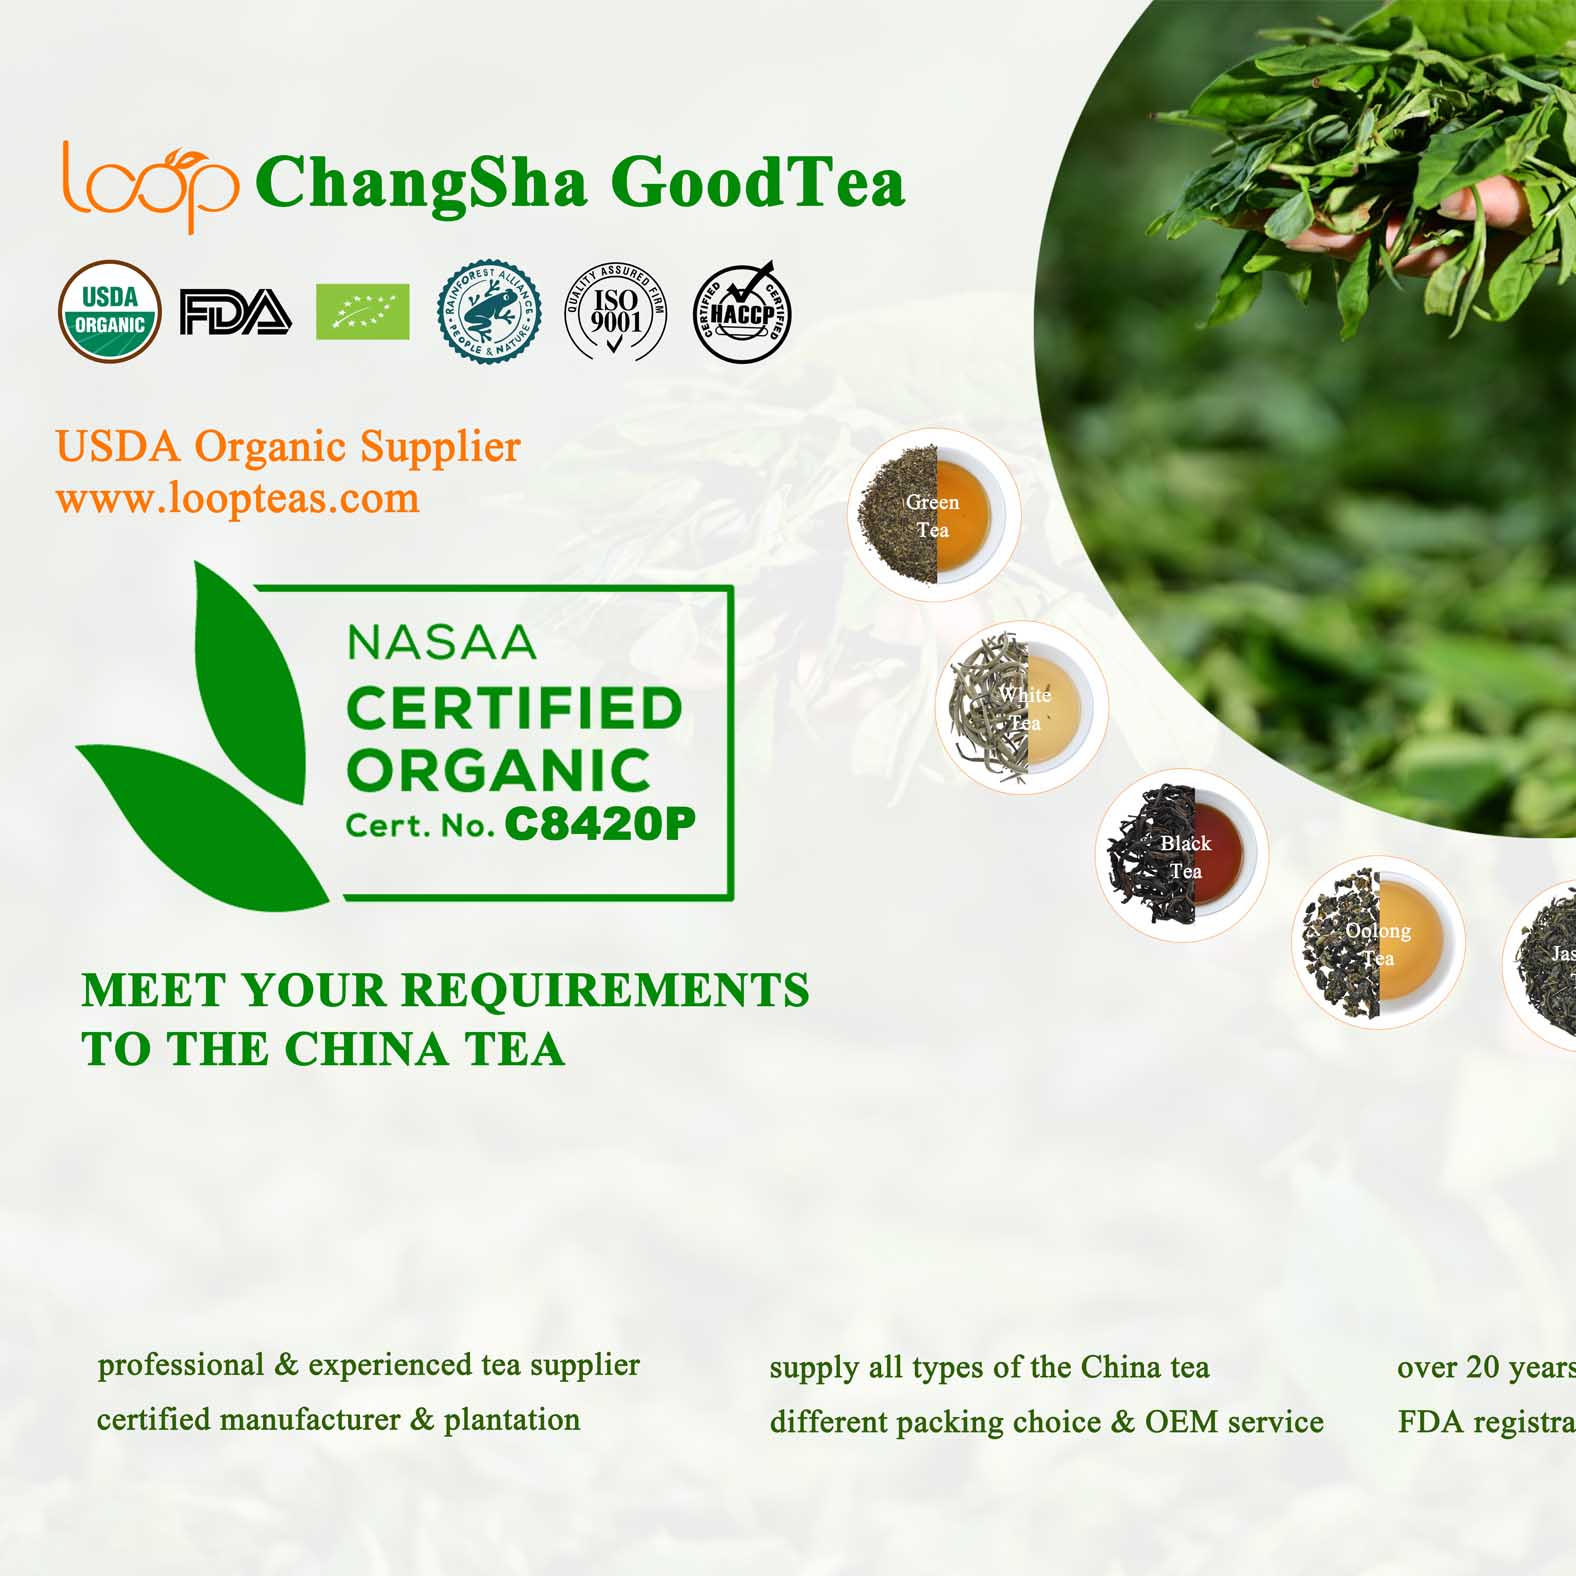 ChangSha GoodTea World Tea Expo 2023